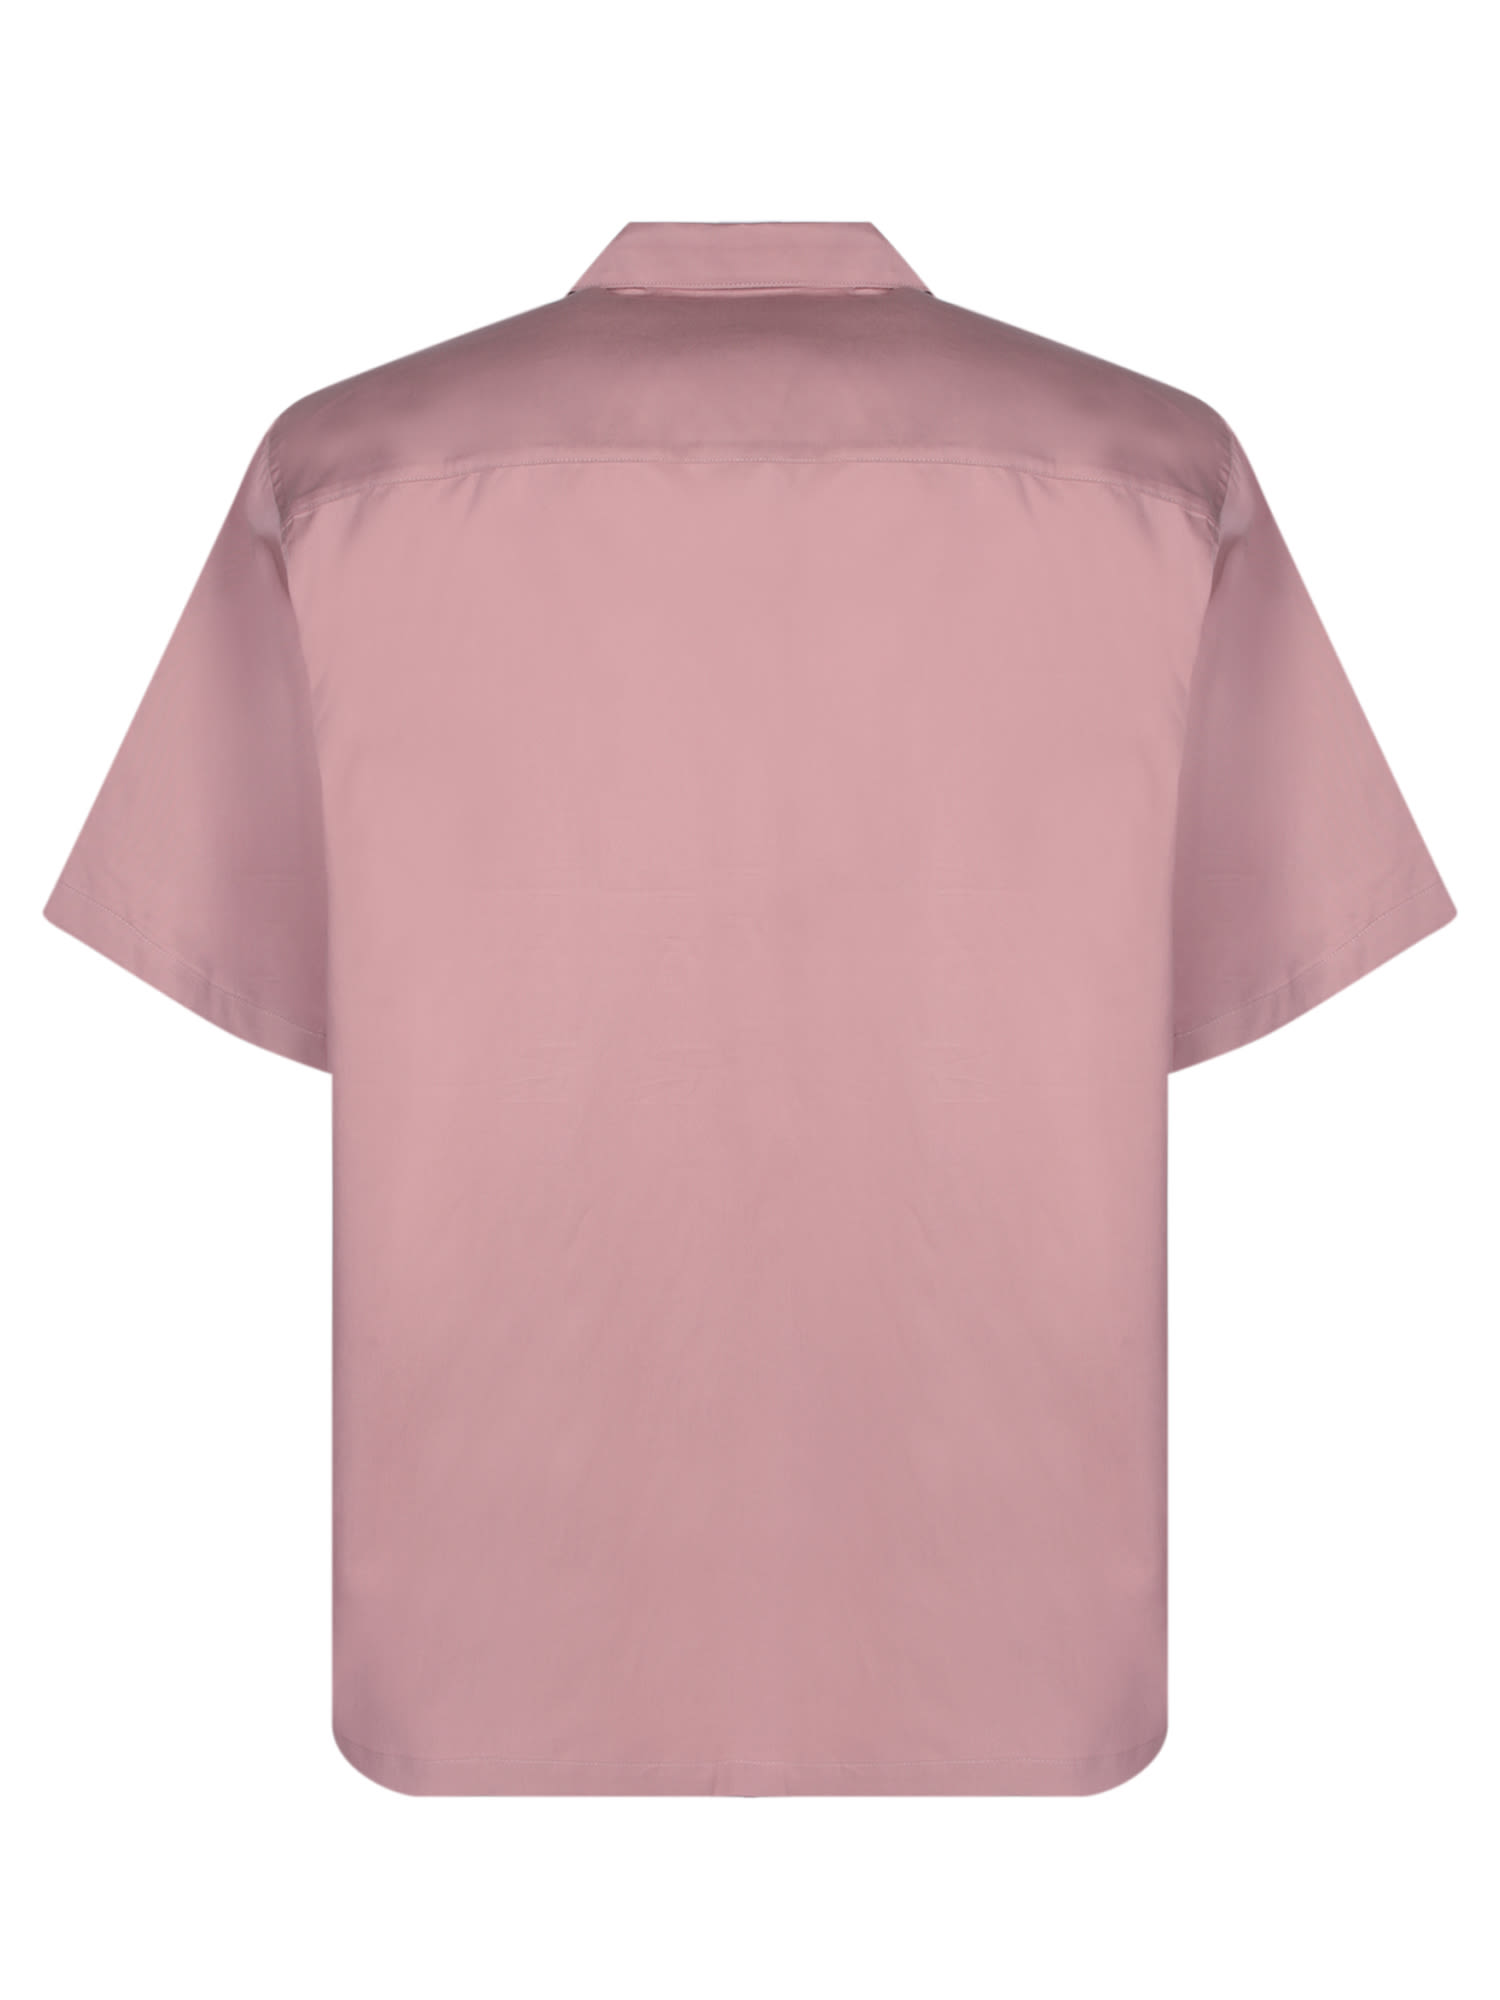 Shop Carhartt Delray Pink Shirt